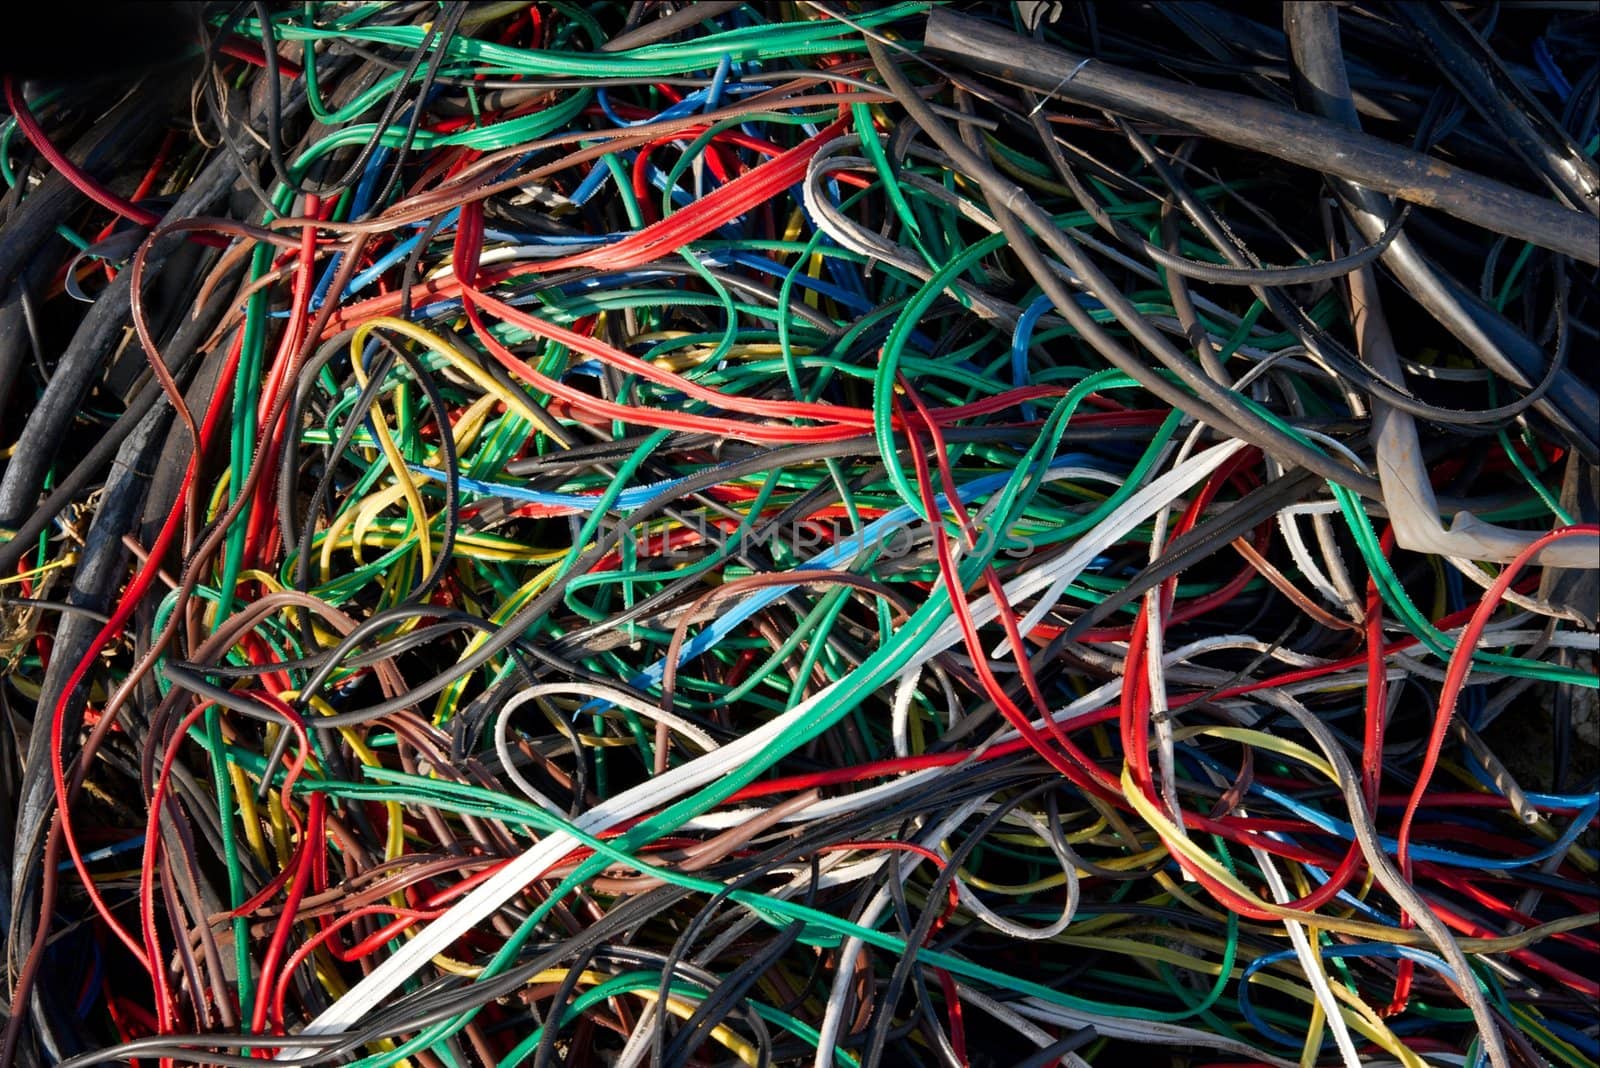 wires by Gudella